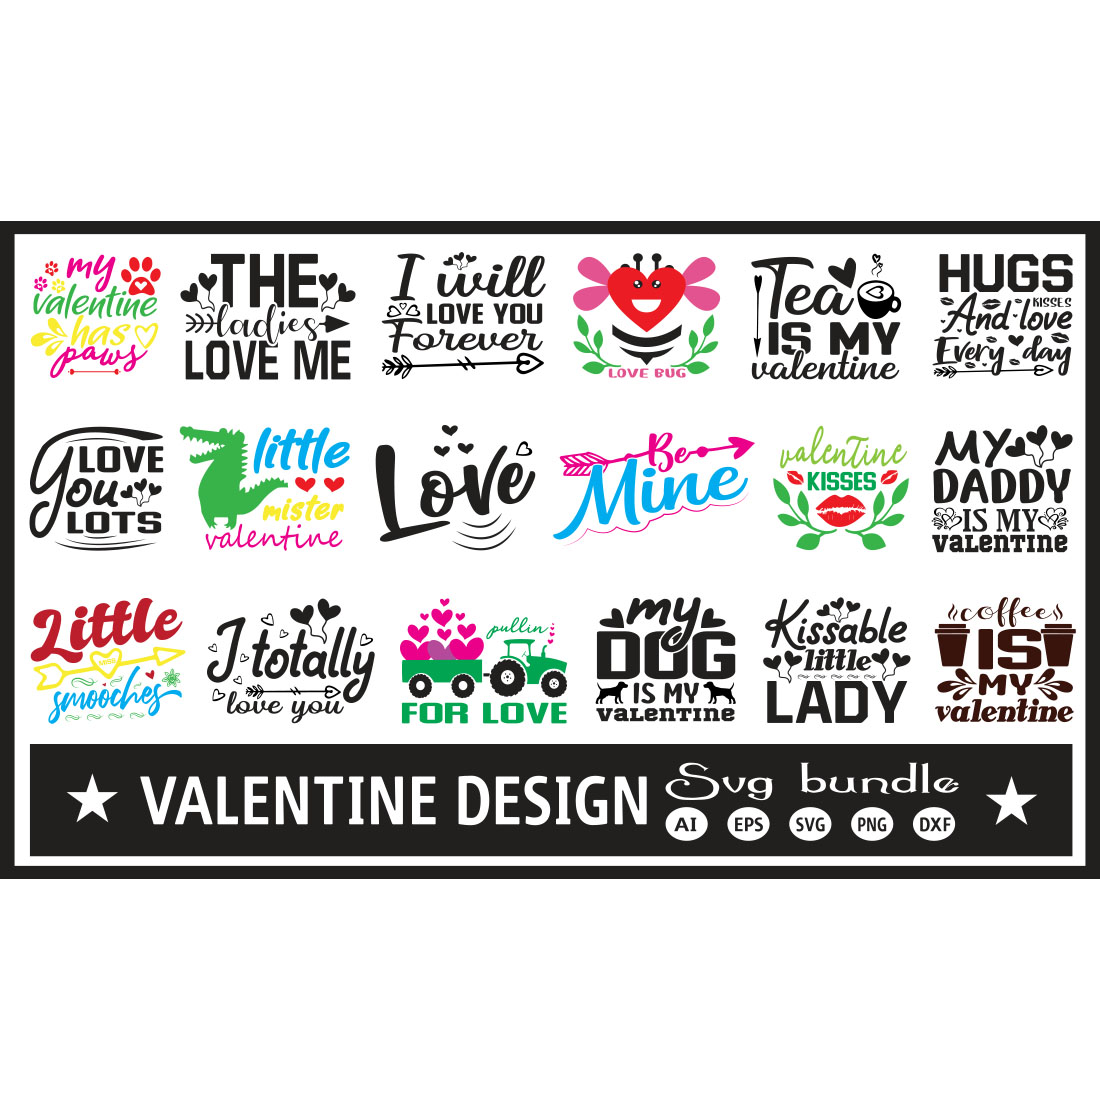 Quotes Valentine SVG Design Bundle cover image.